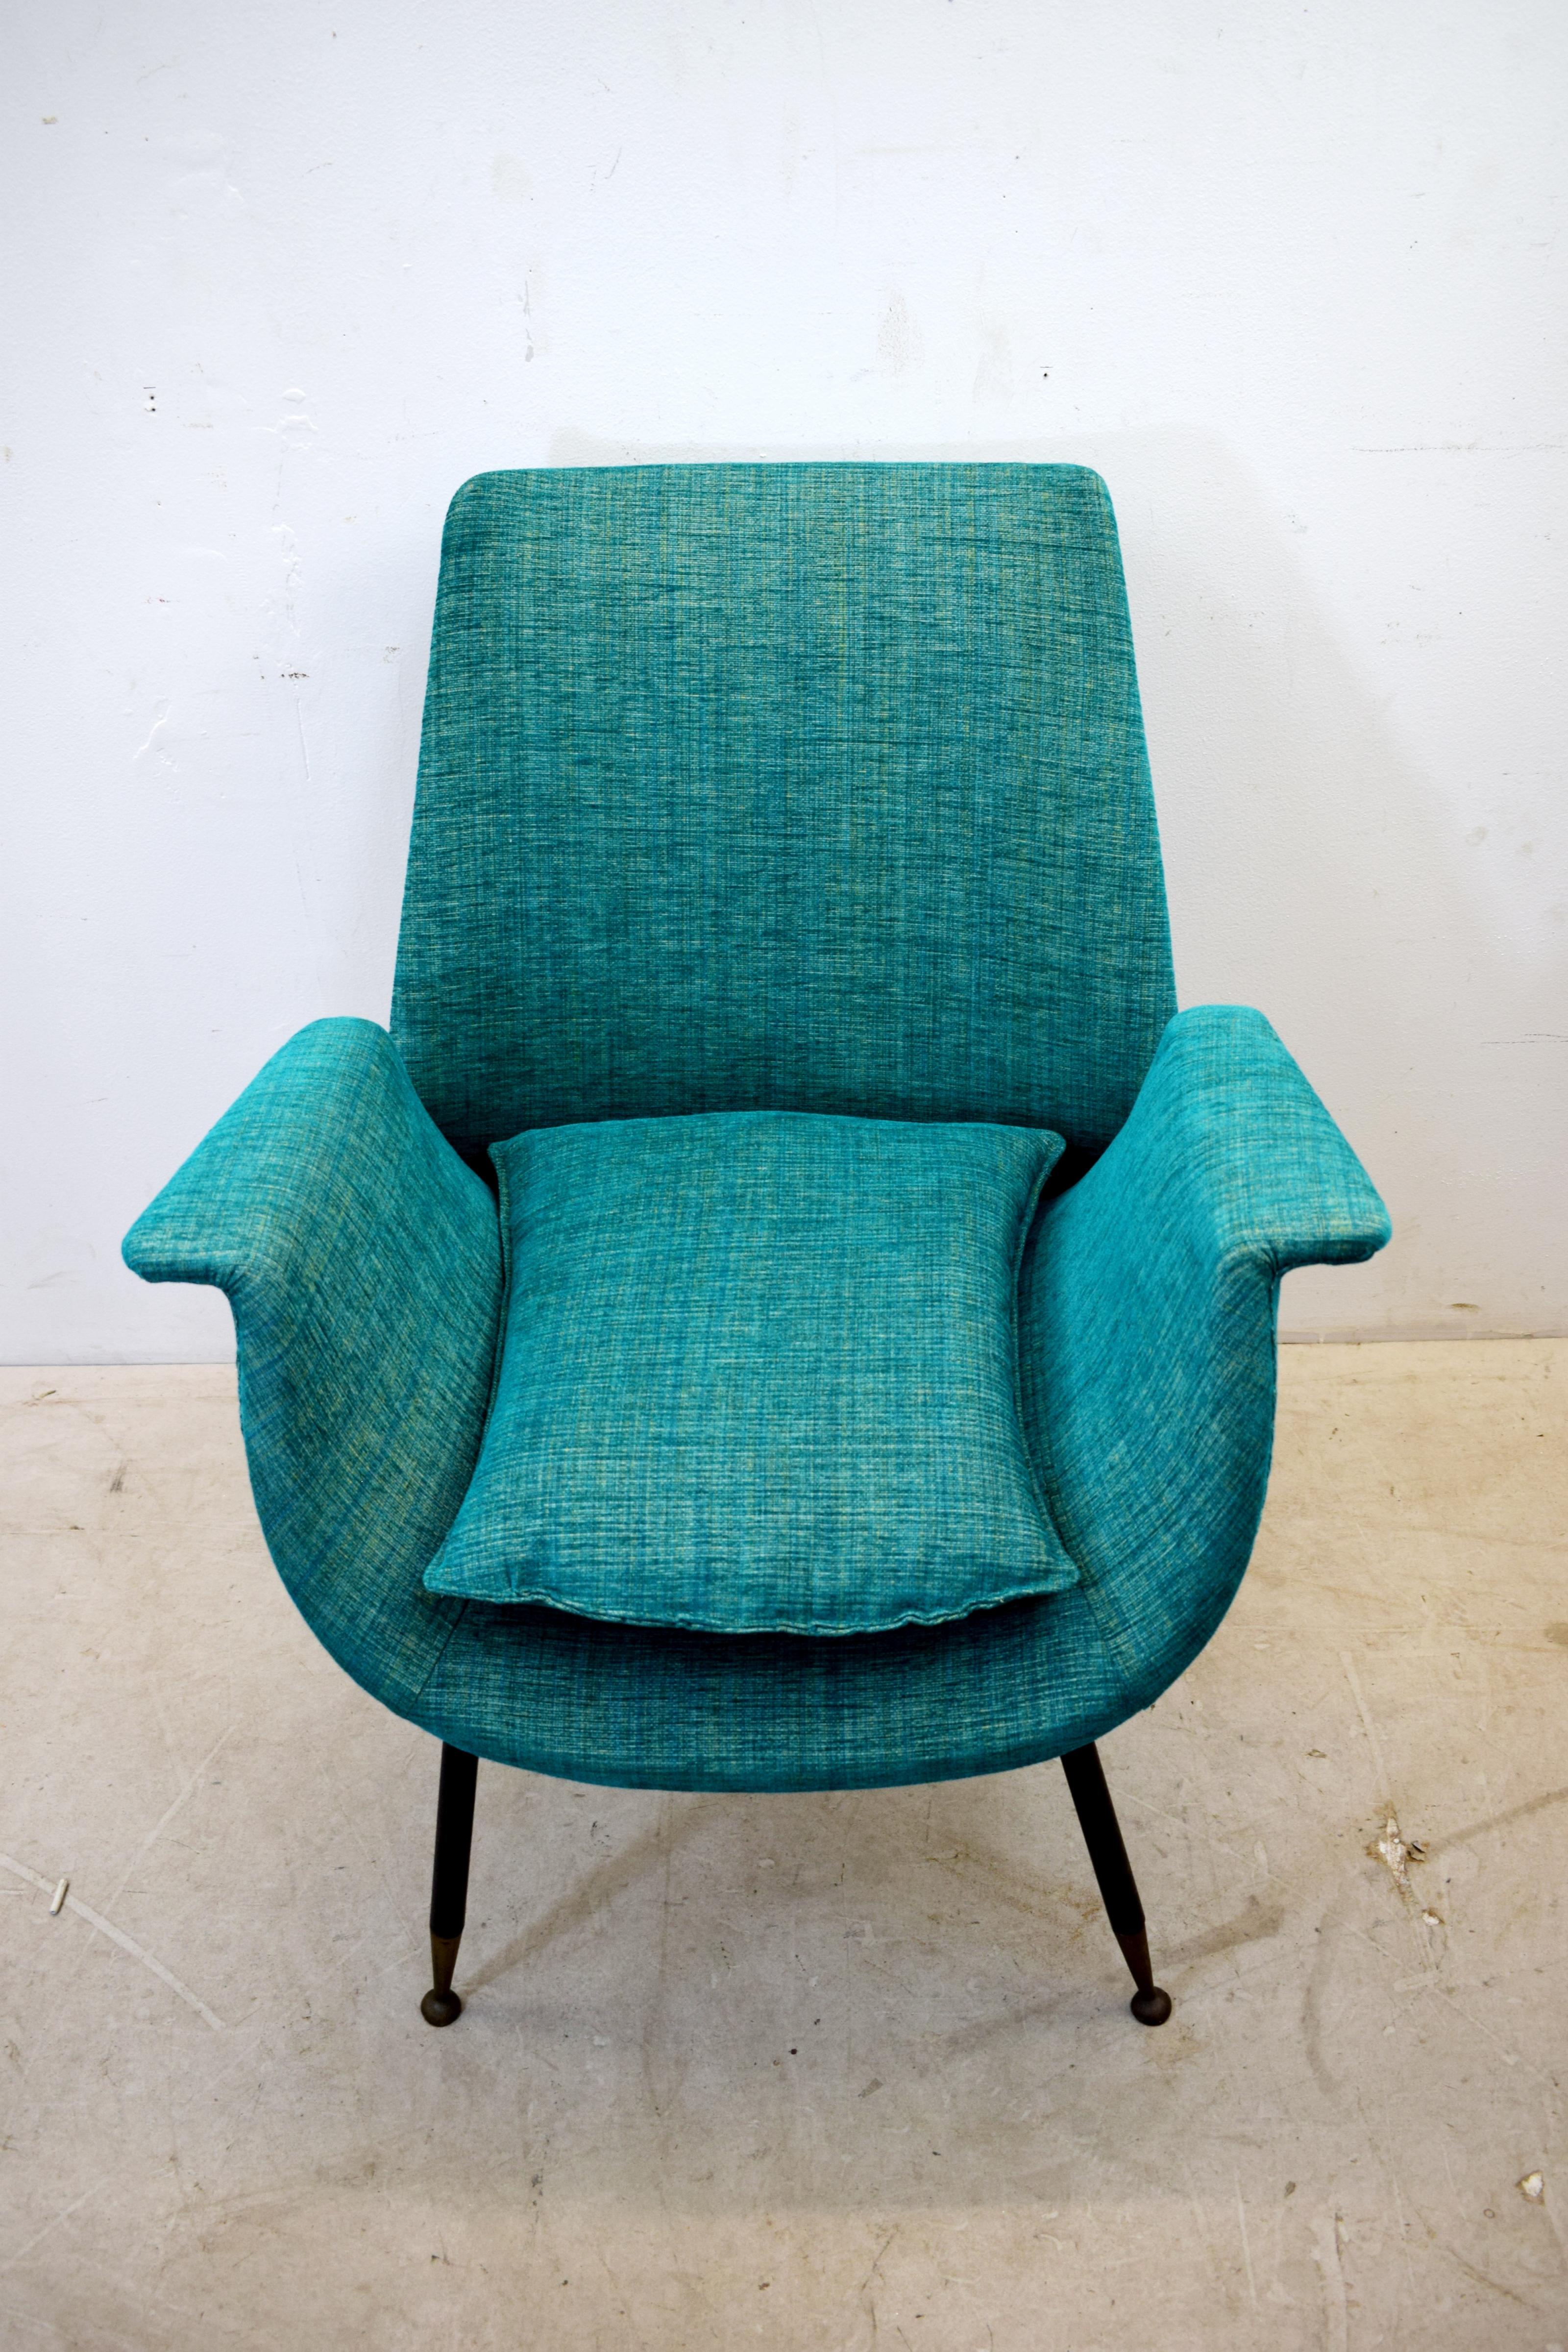 Italian chair by Gastone Rinaldi, 1950s.
Dimensions: H= 82 cm; W= 65 cm; D= 65 cm; Height seat = 45 cm.